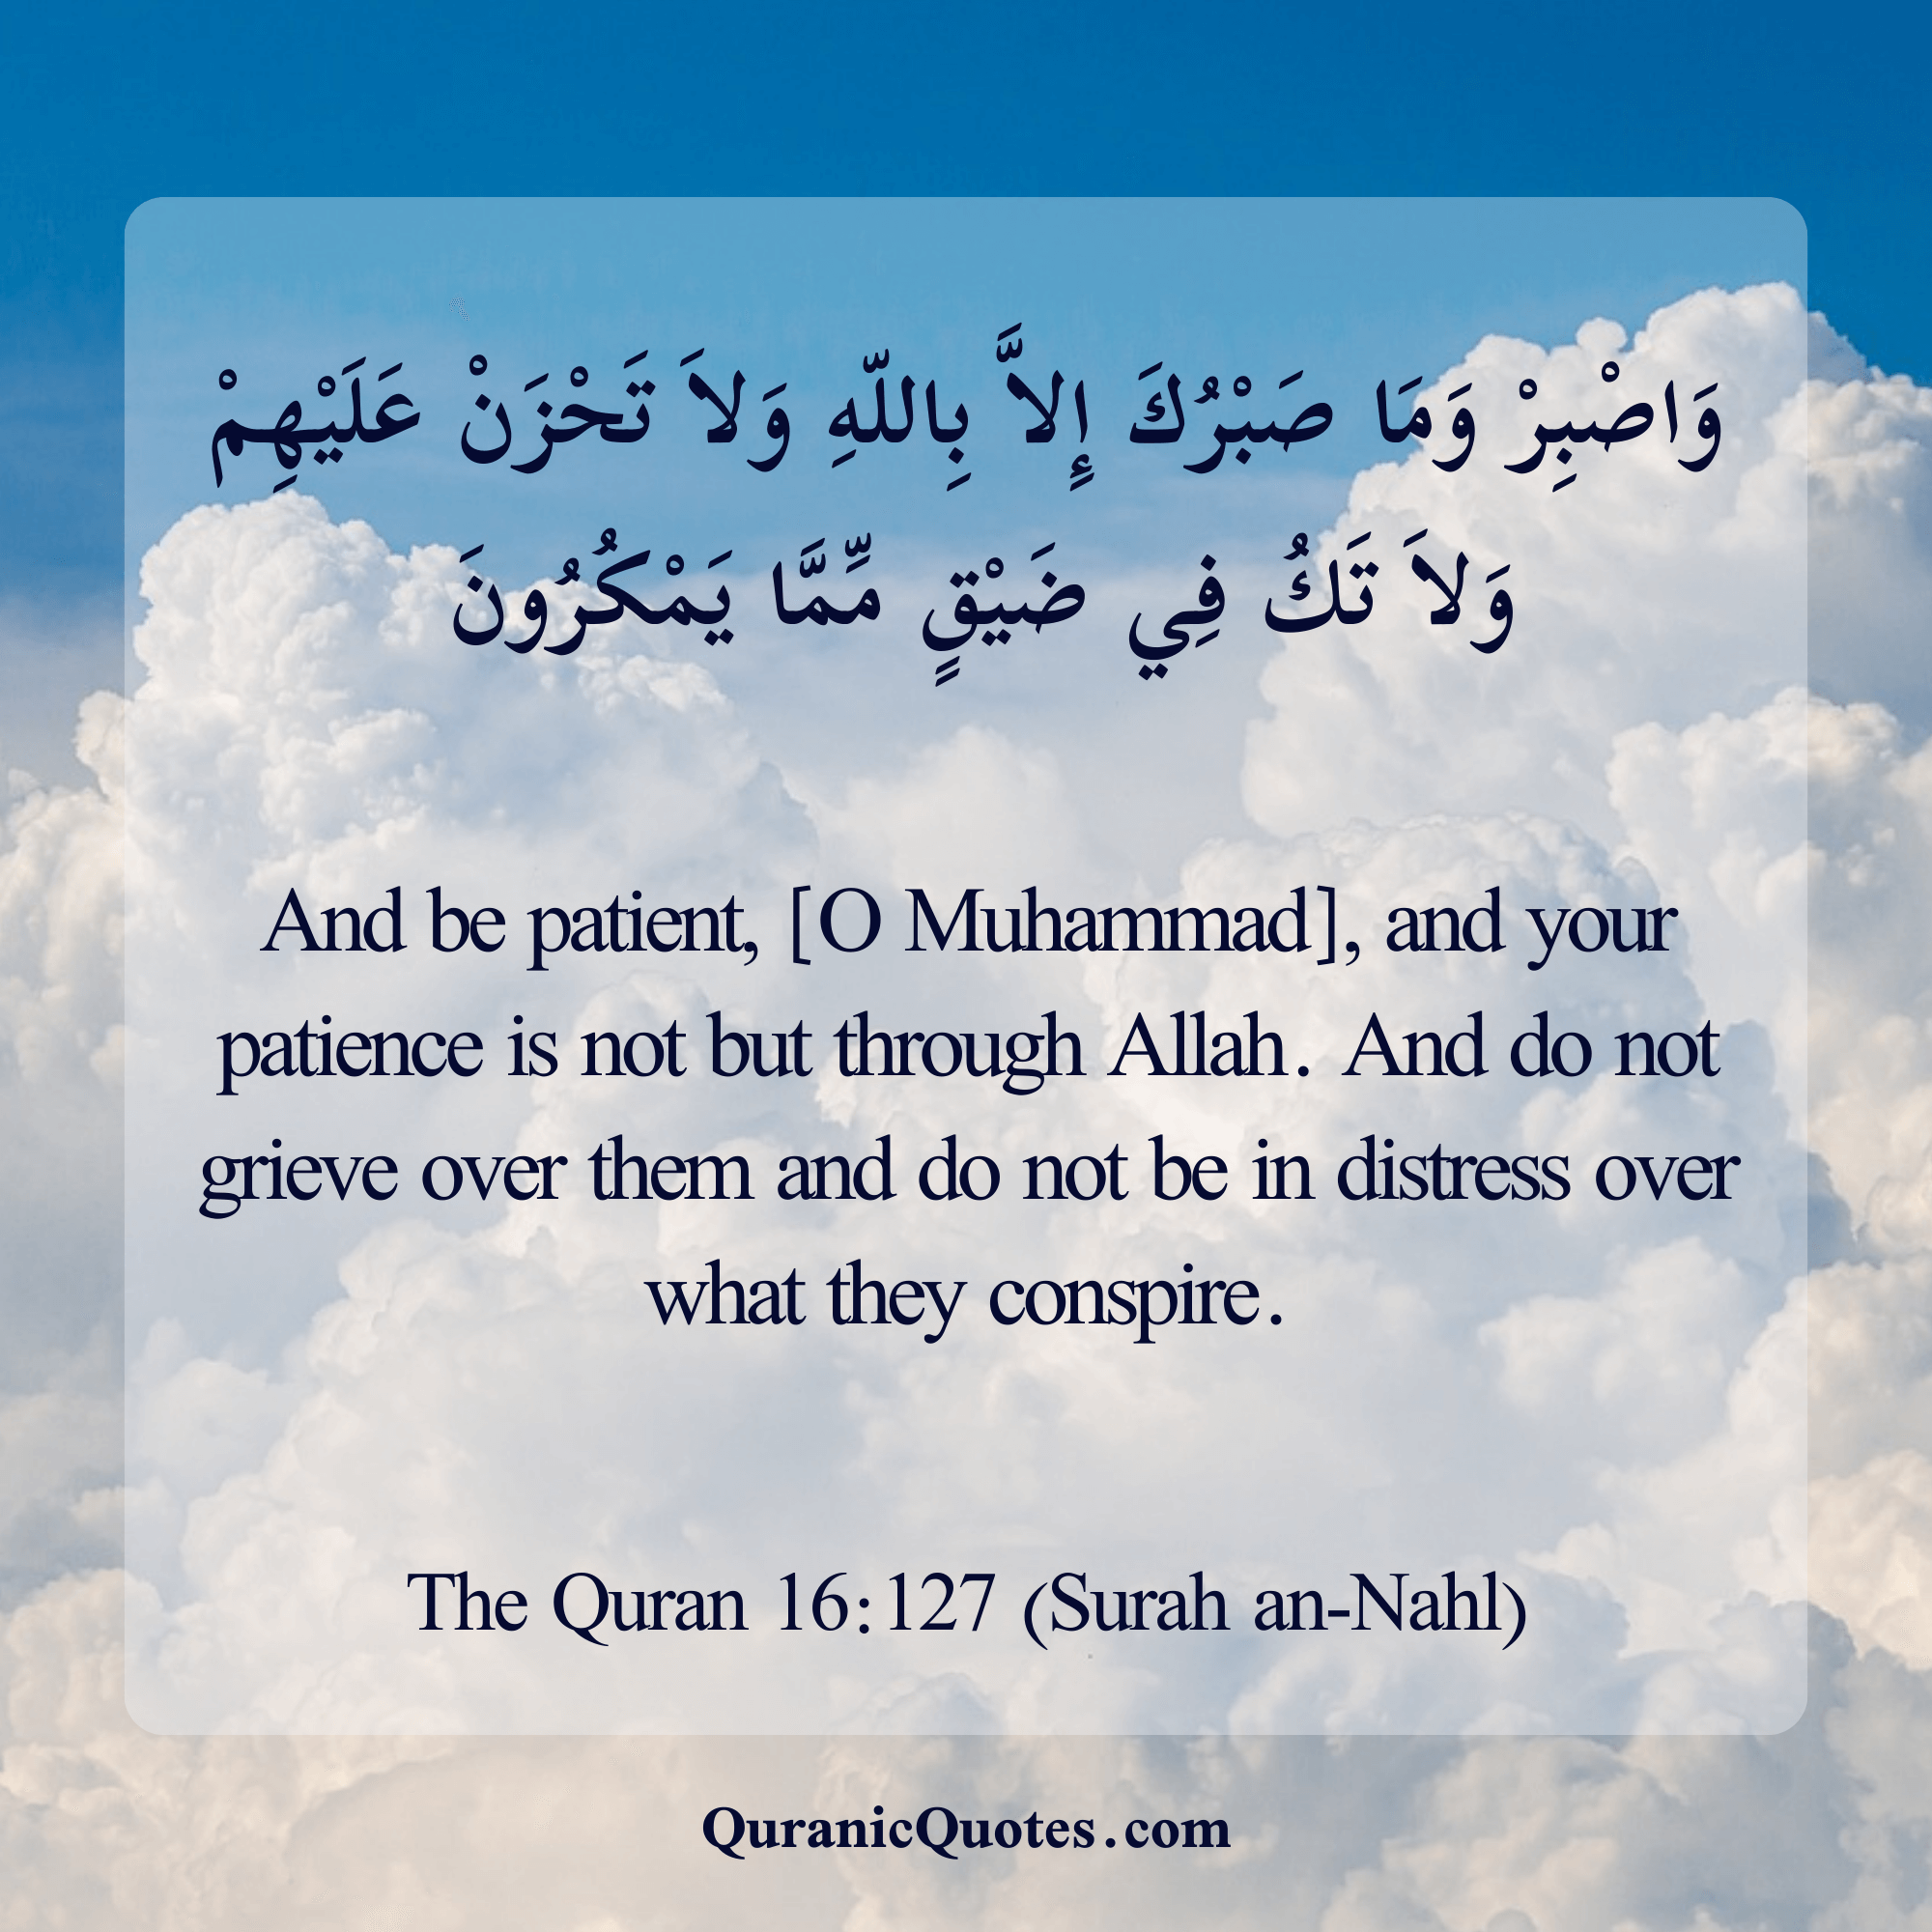 Quranic Quotes in English 572